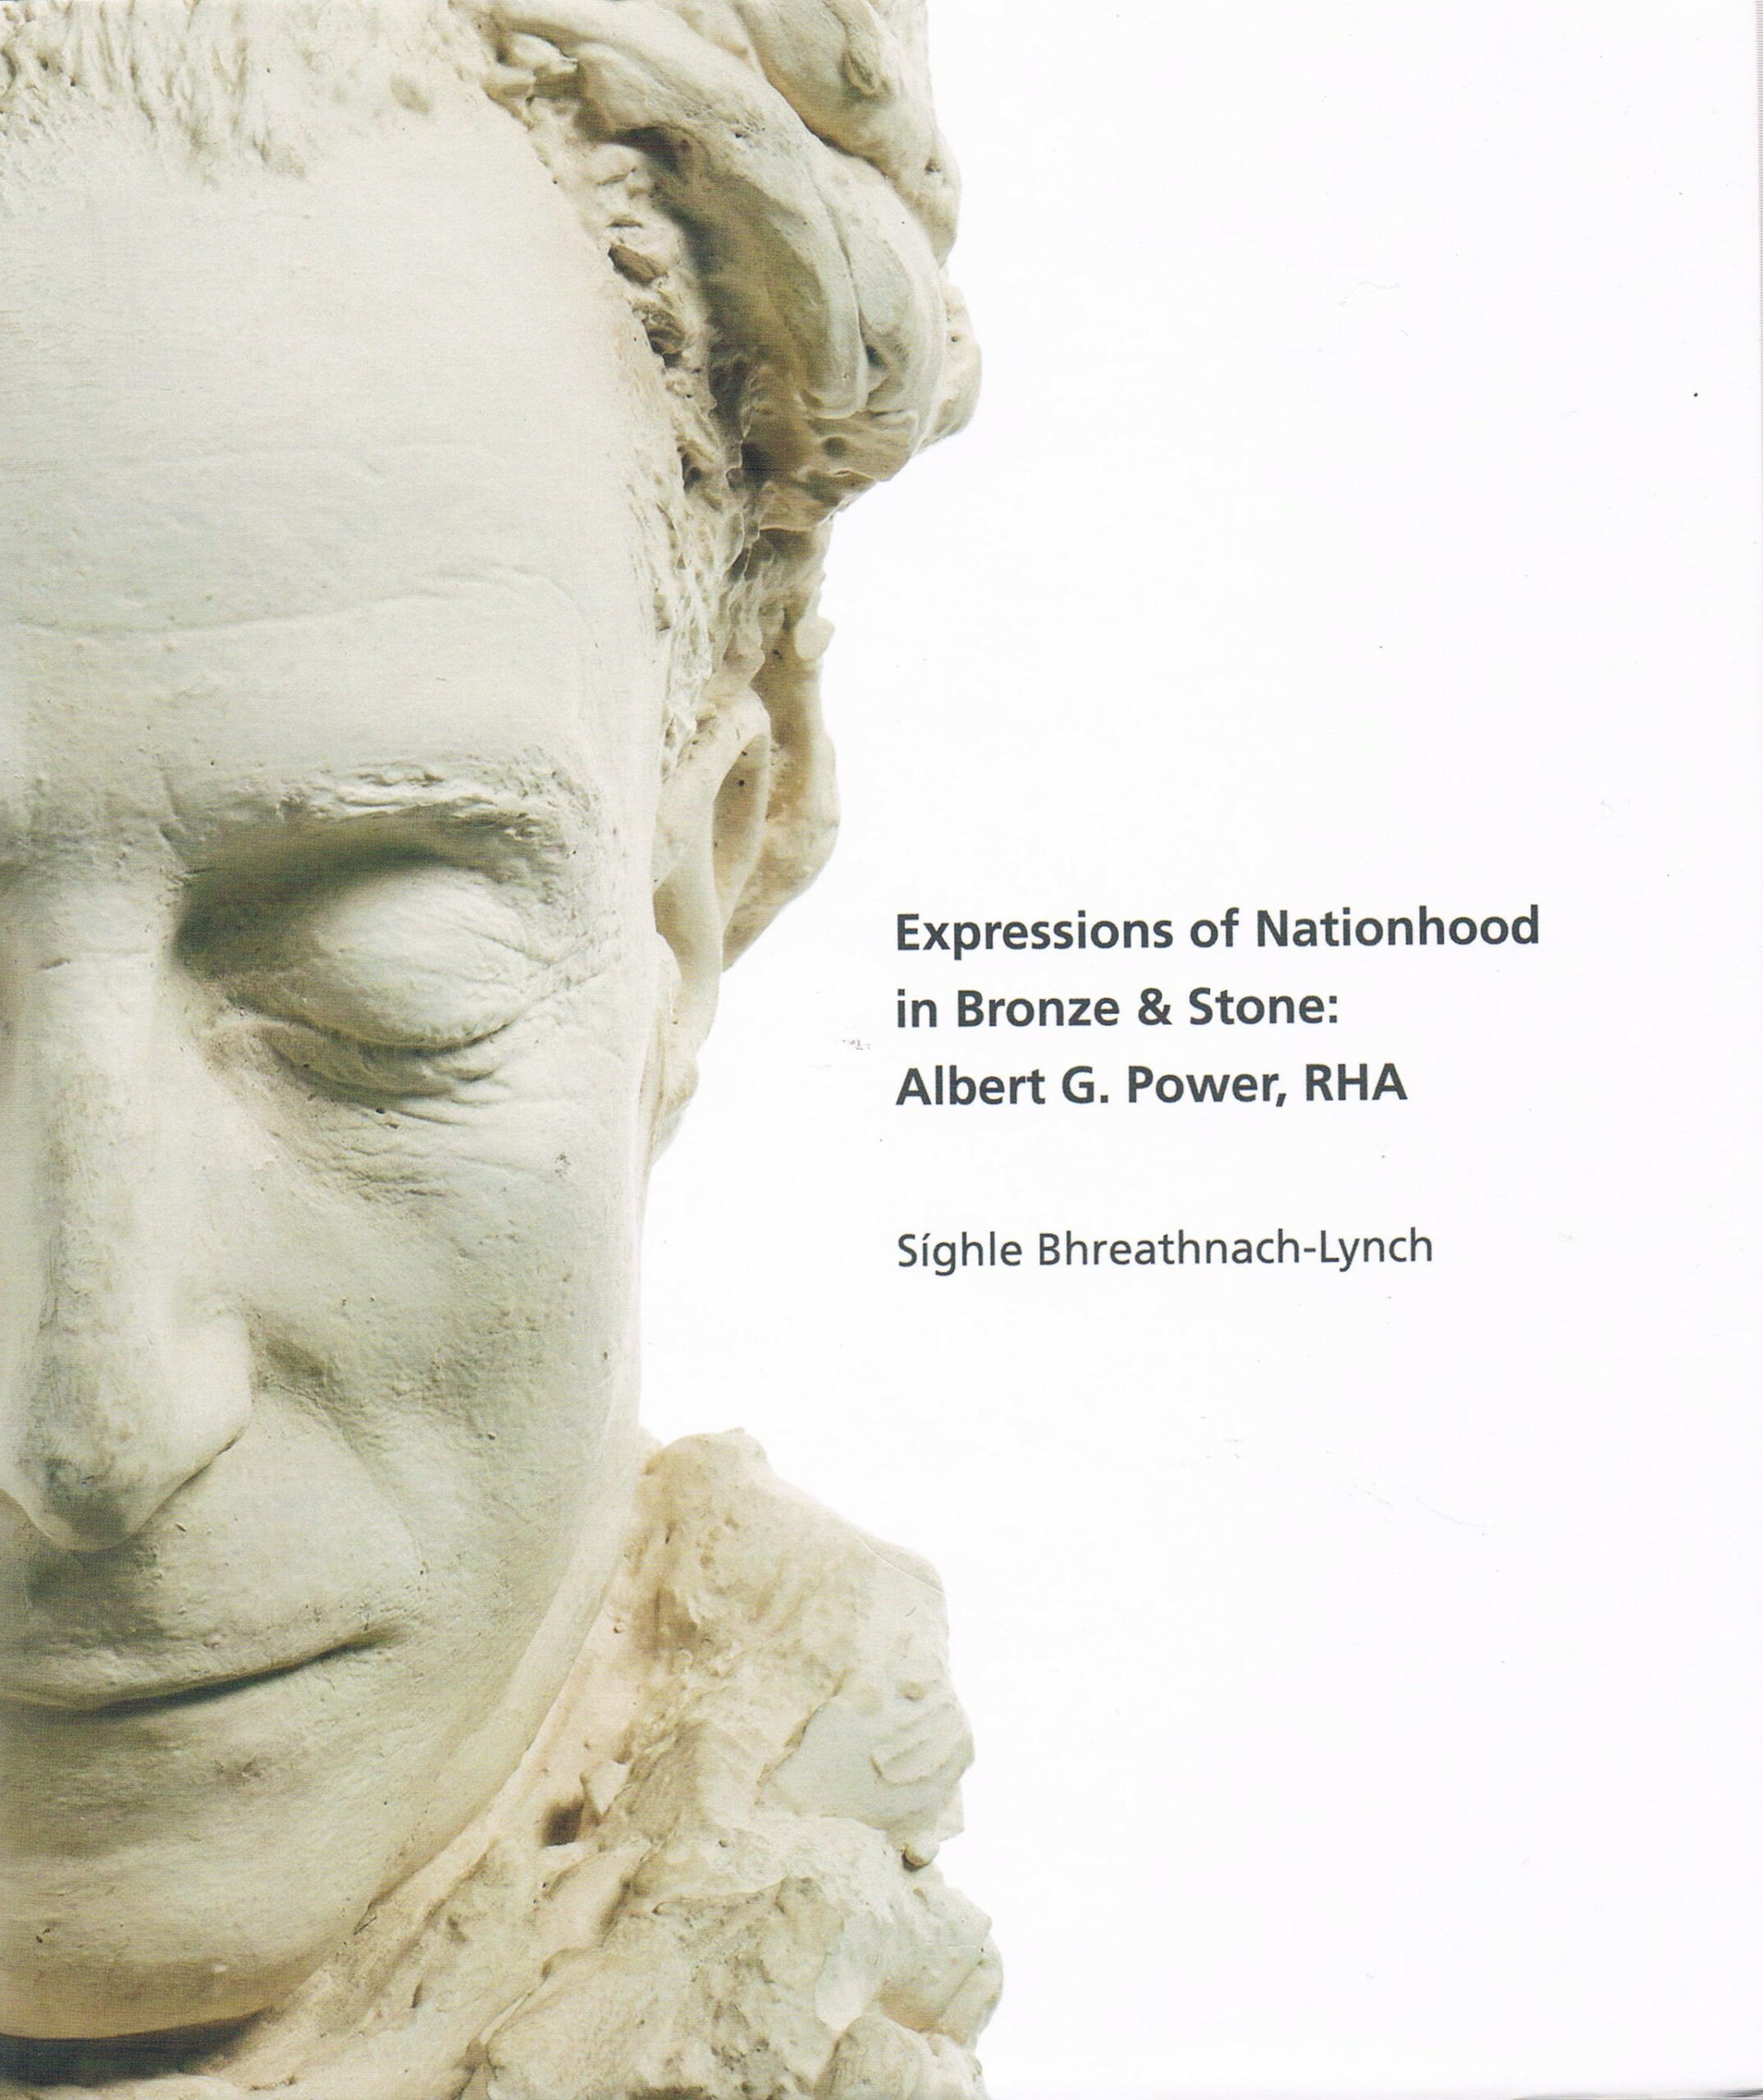 Expressions of Nationhood in Bronze & Stone: Albert G. Power, RHA by Sigle Bhreathnach-Lynch